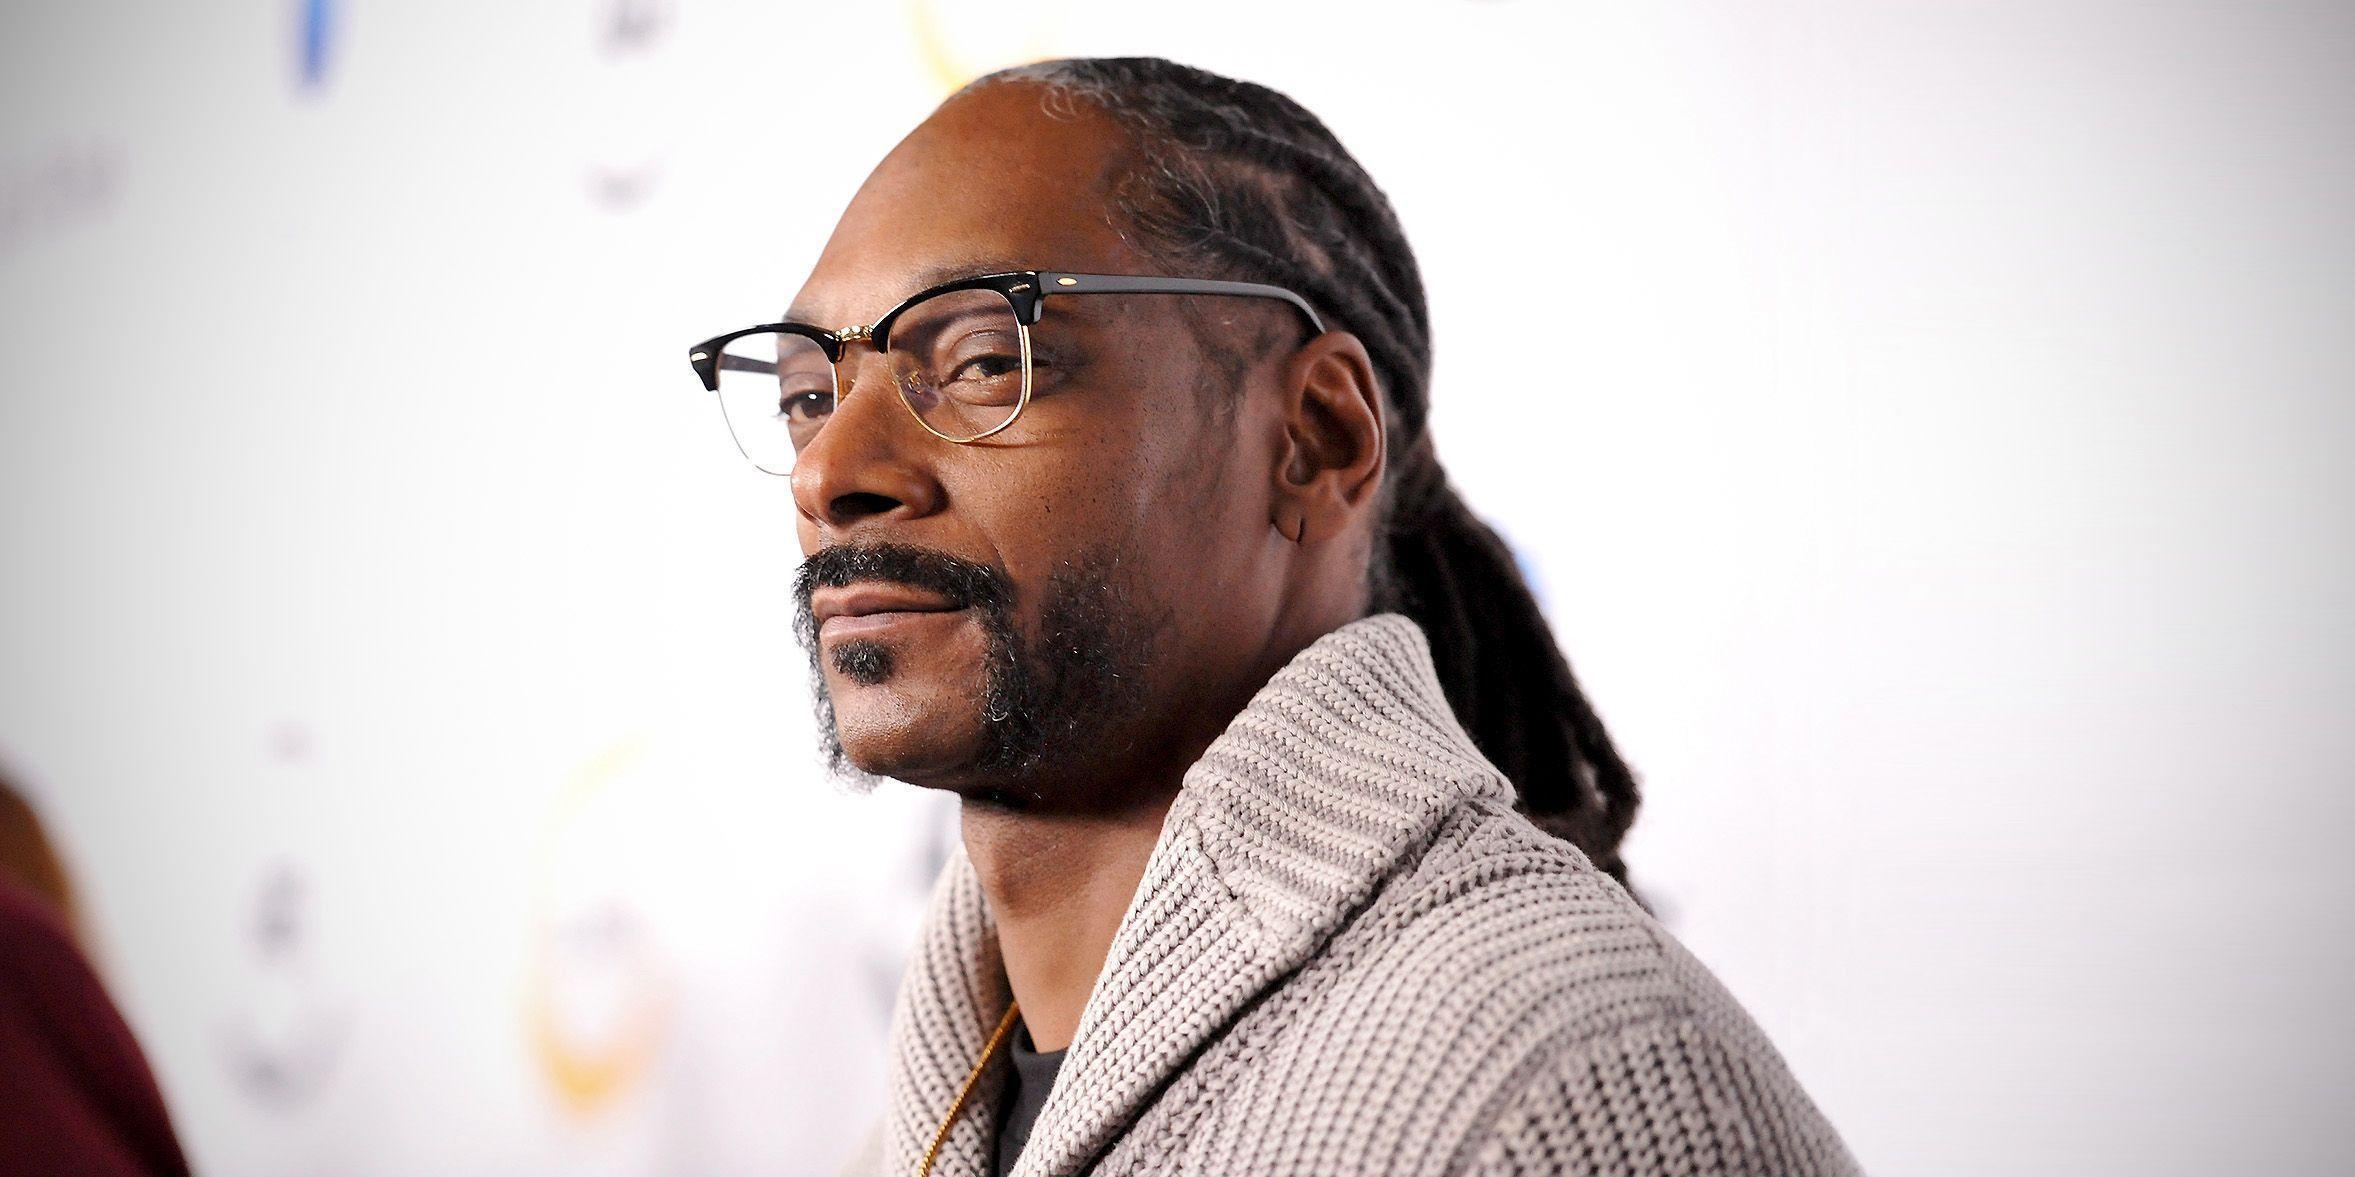 Snoop Dogg Wallpaper Background